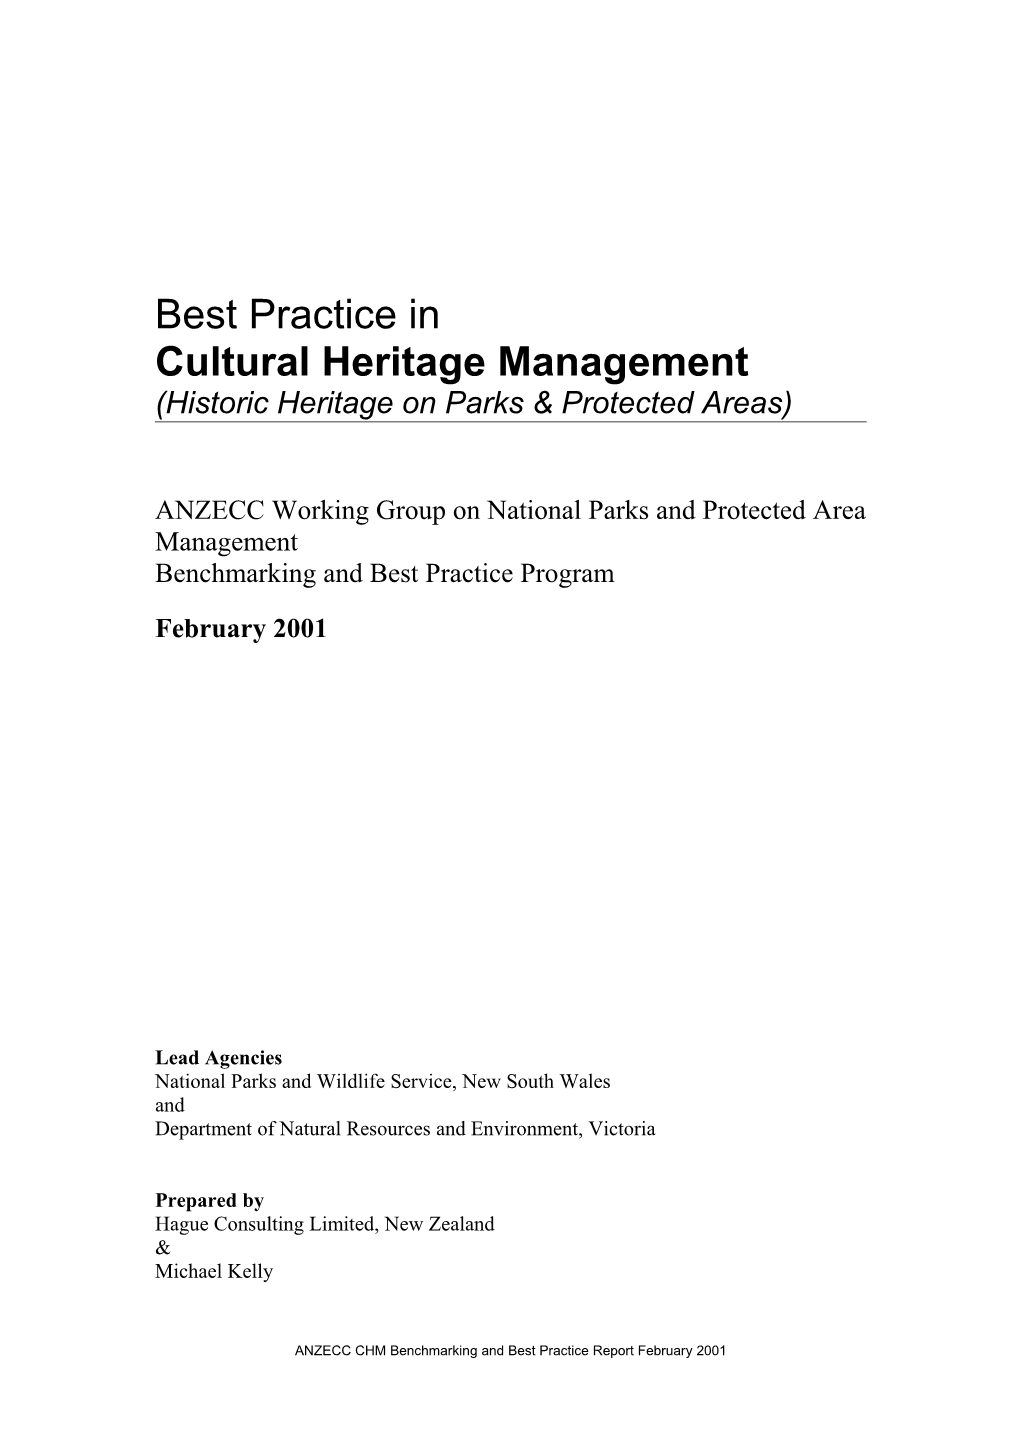 Cultural Heritage Management